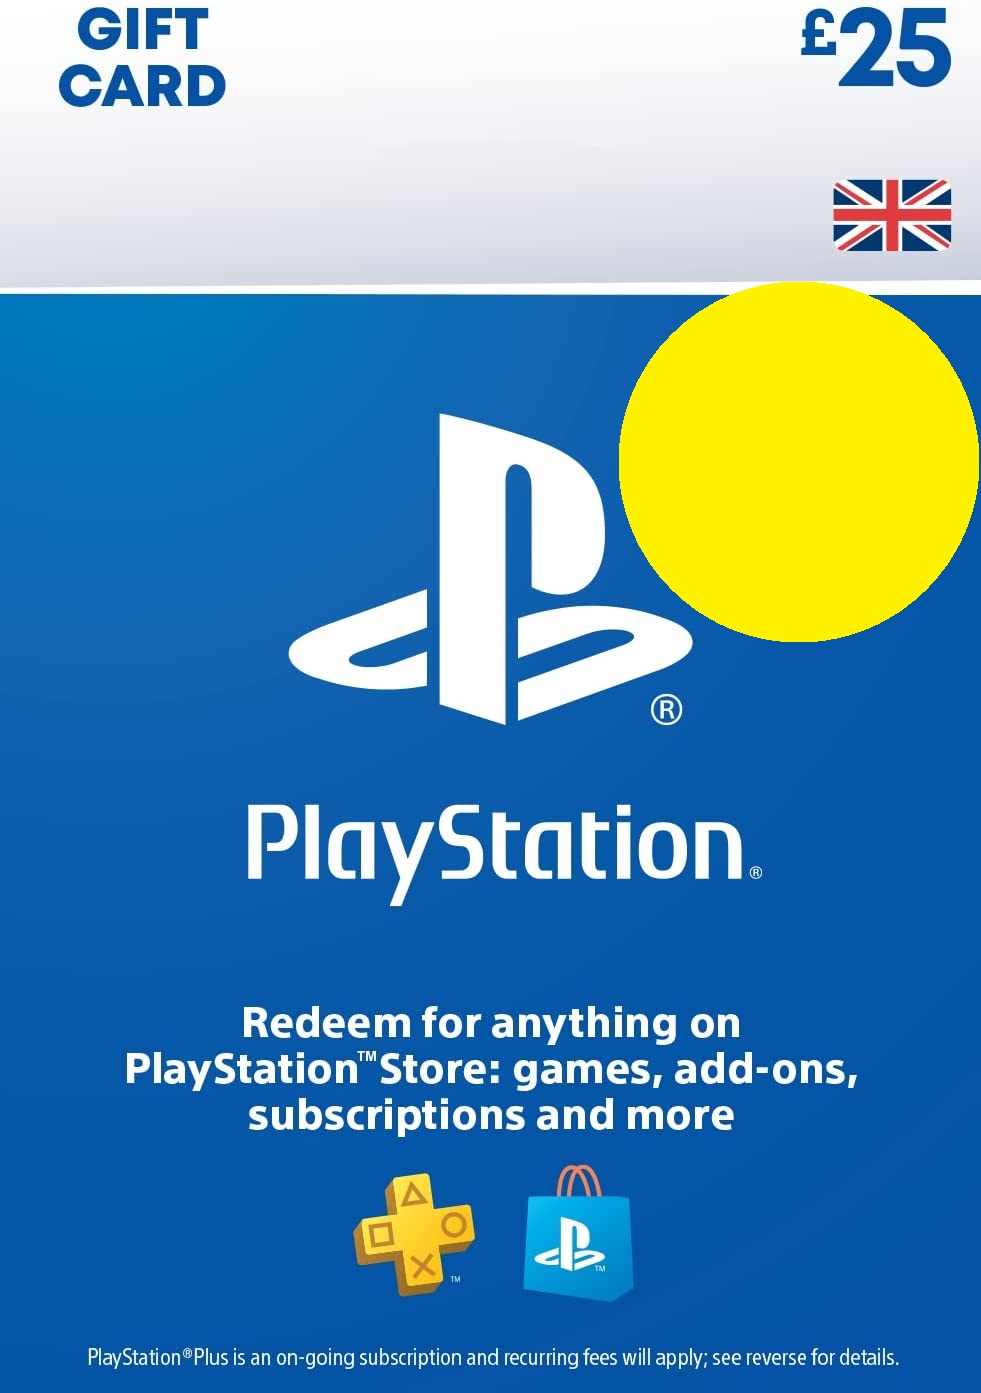 PlayStation Store Gift Card 25 GBP, PSN UK Account